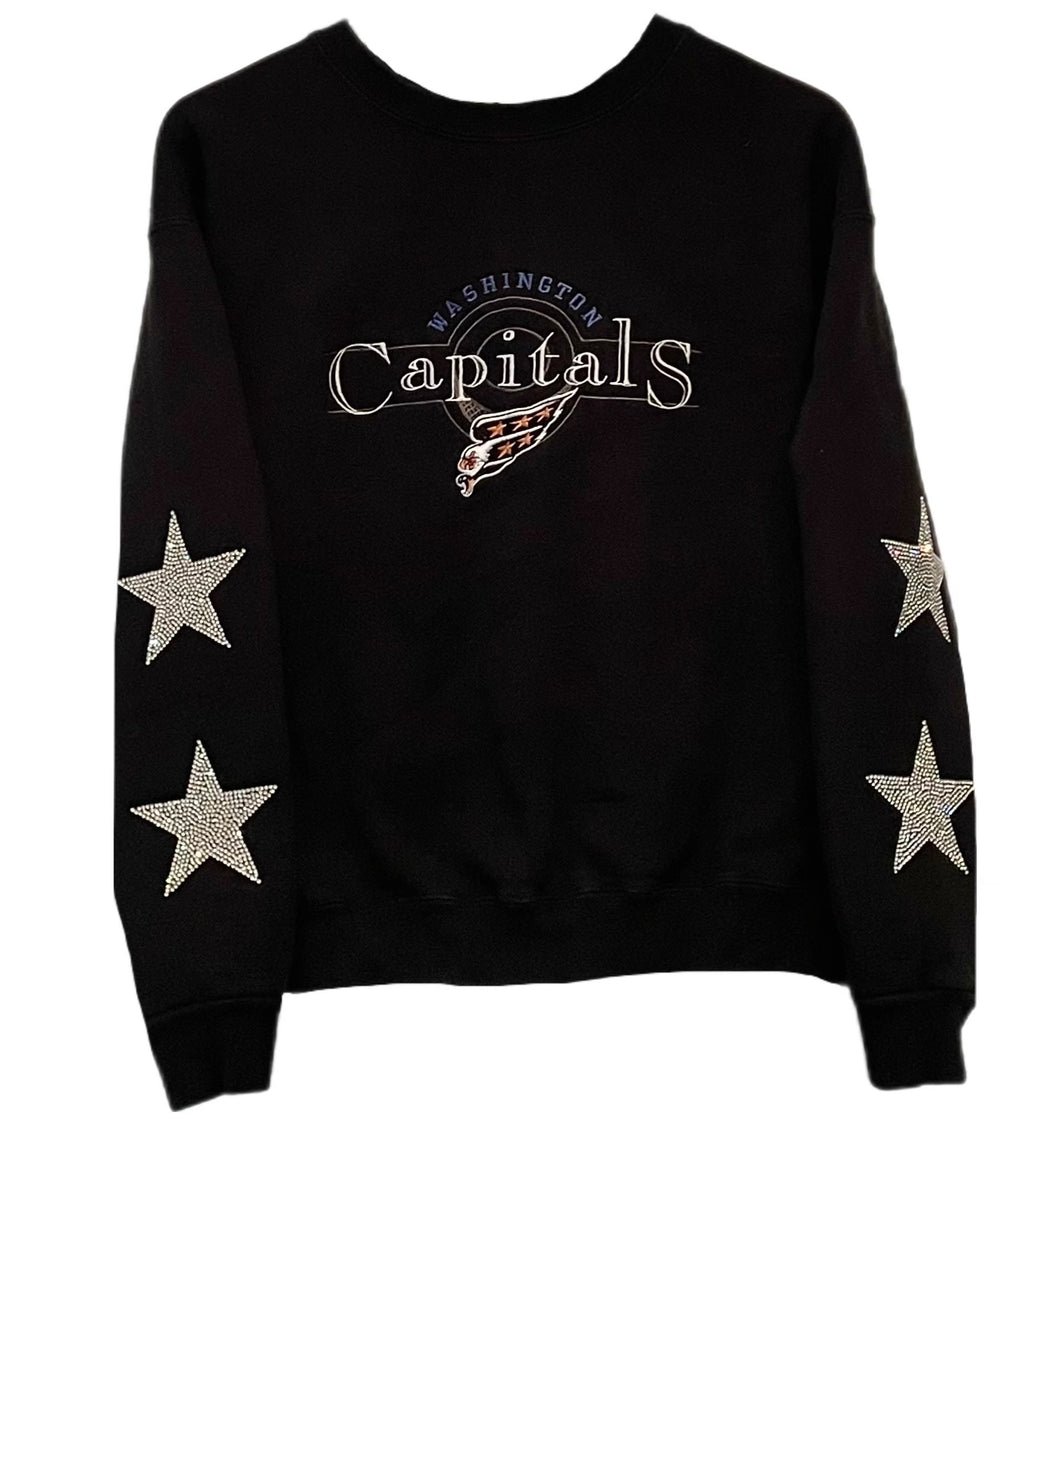 Washington Capitals, NHL One of a KIND Vintage Sweatshirt with Crystal Stars Design